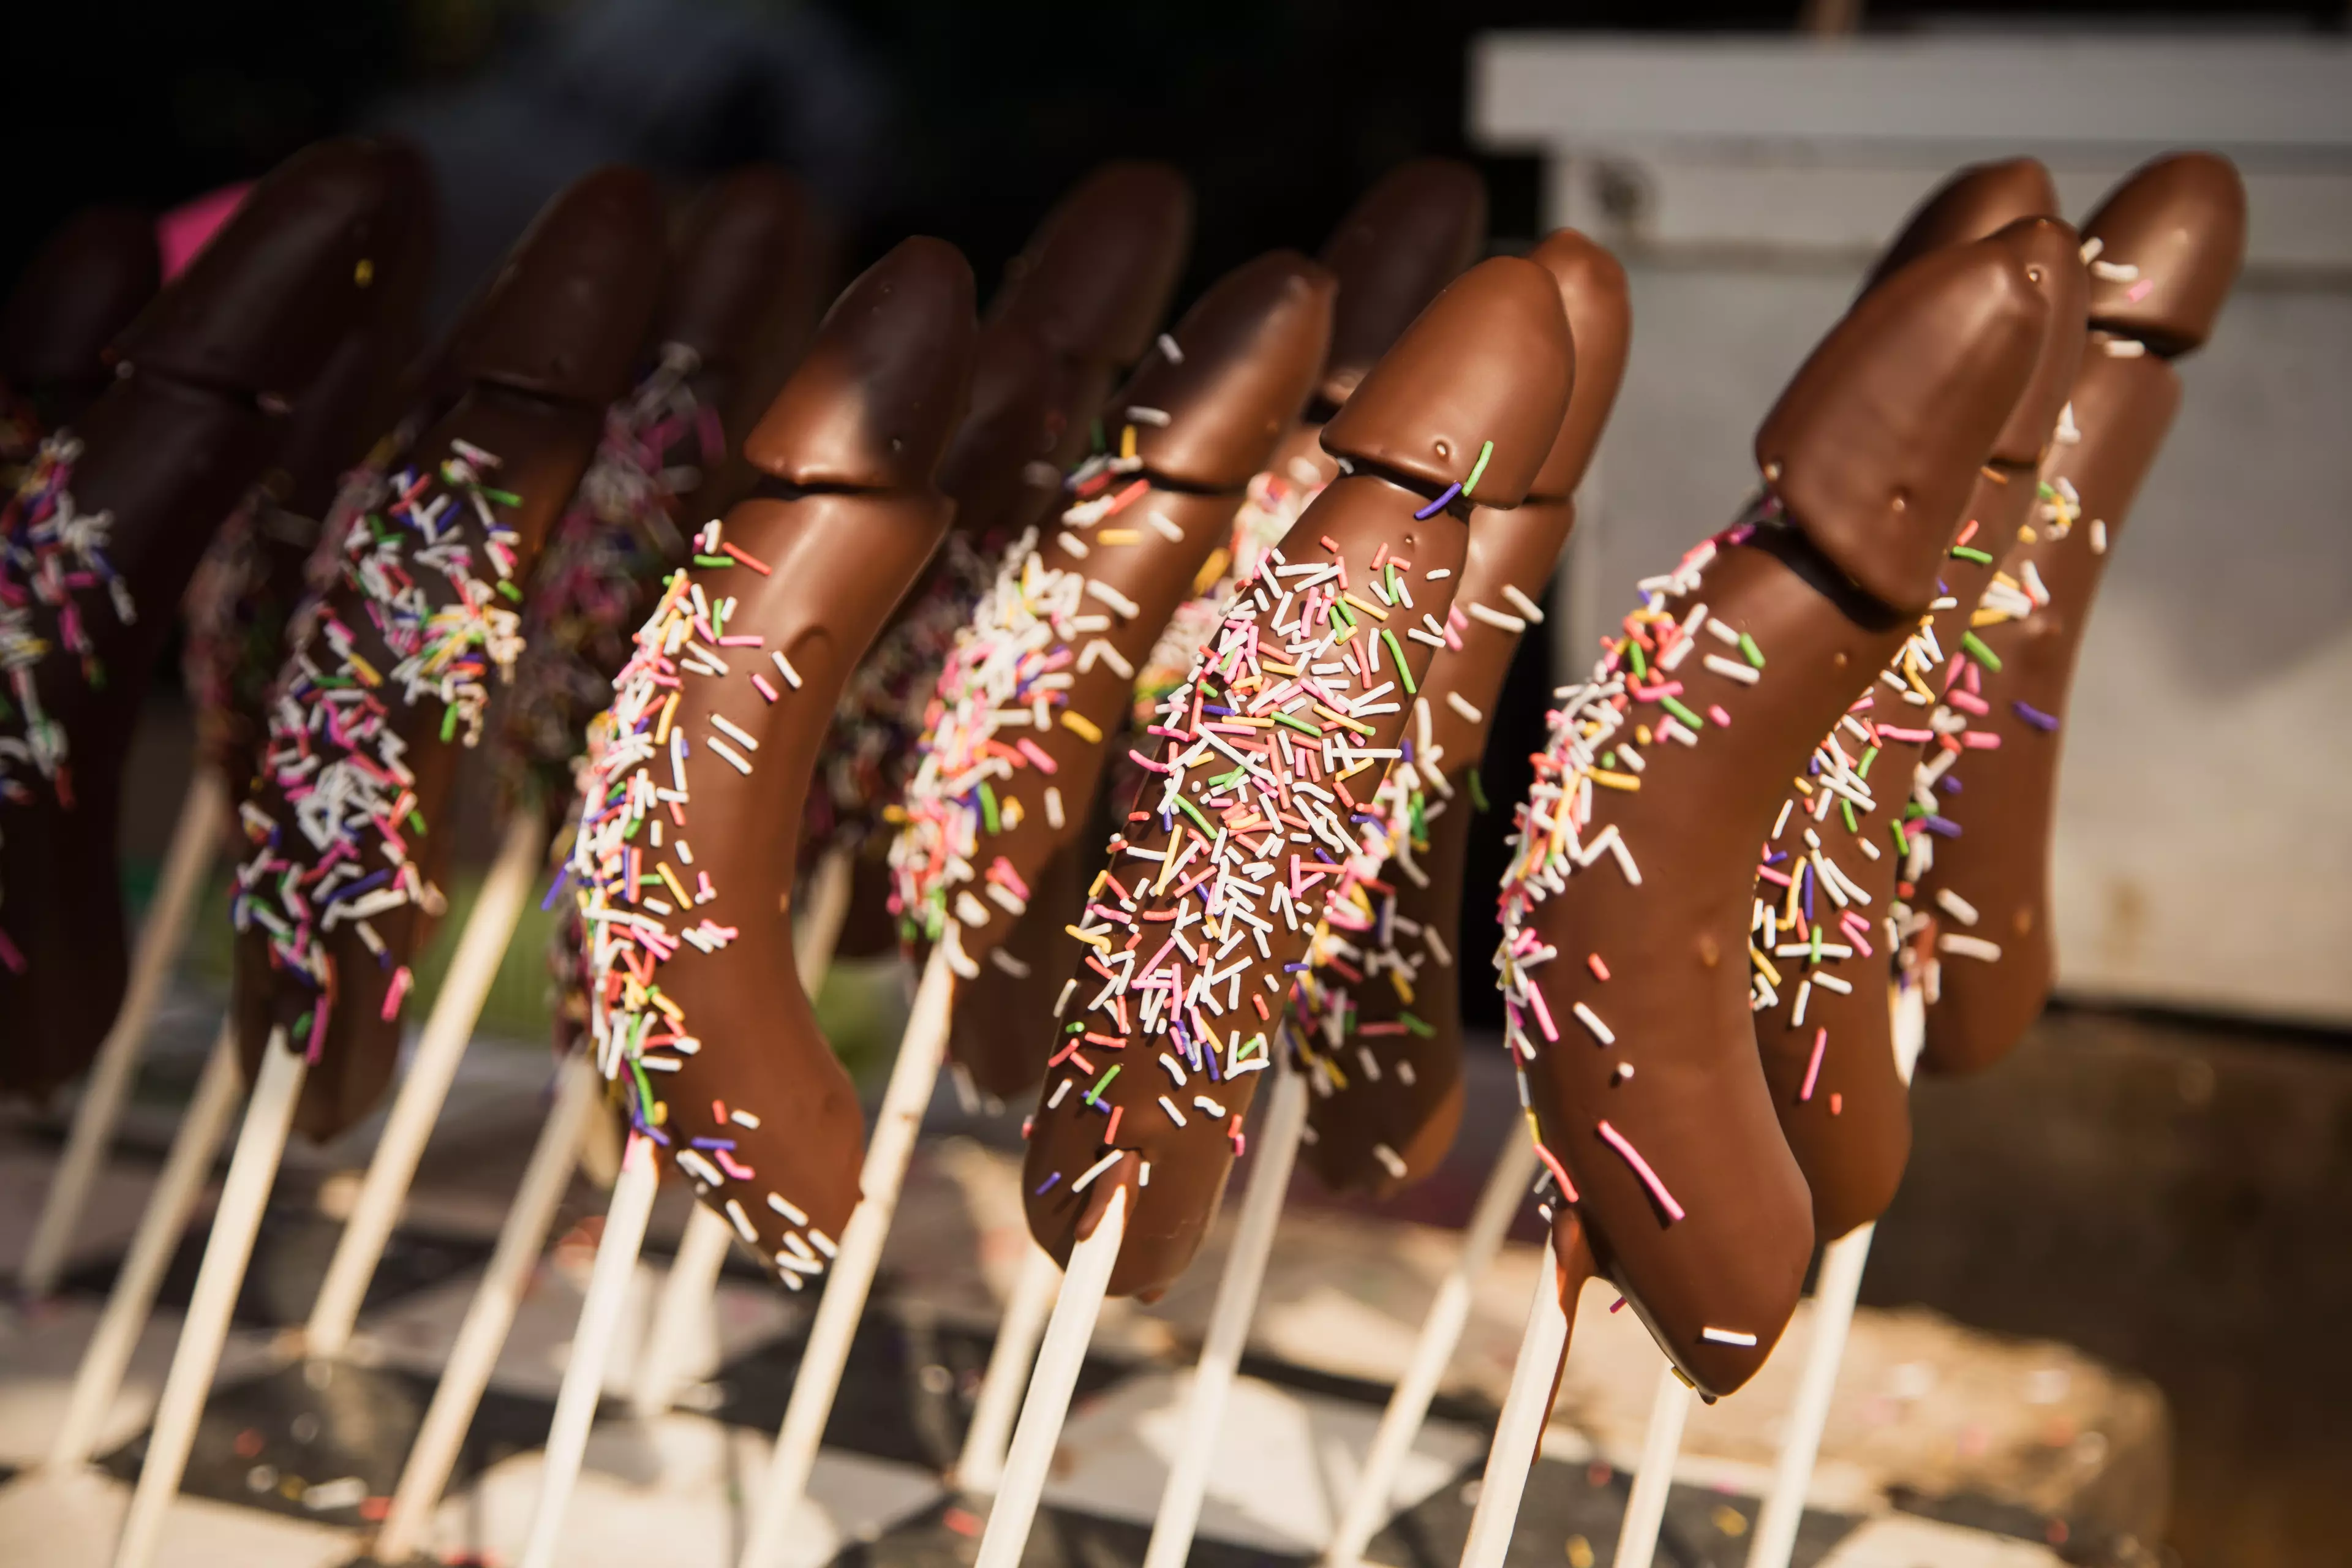 Visitors can enjoy a plethora of phallic-shaped sweet treats.